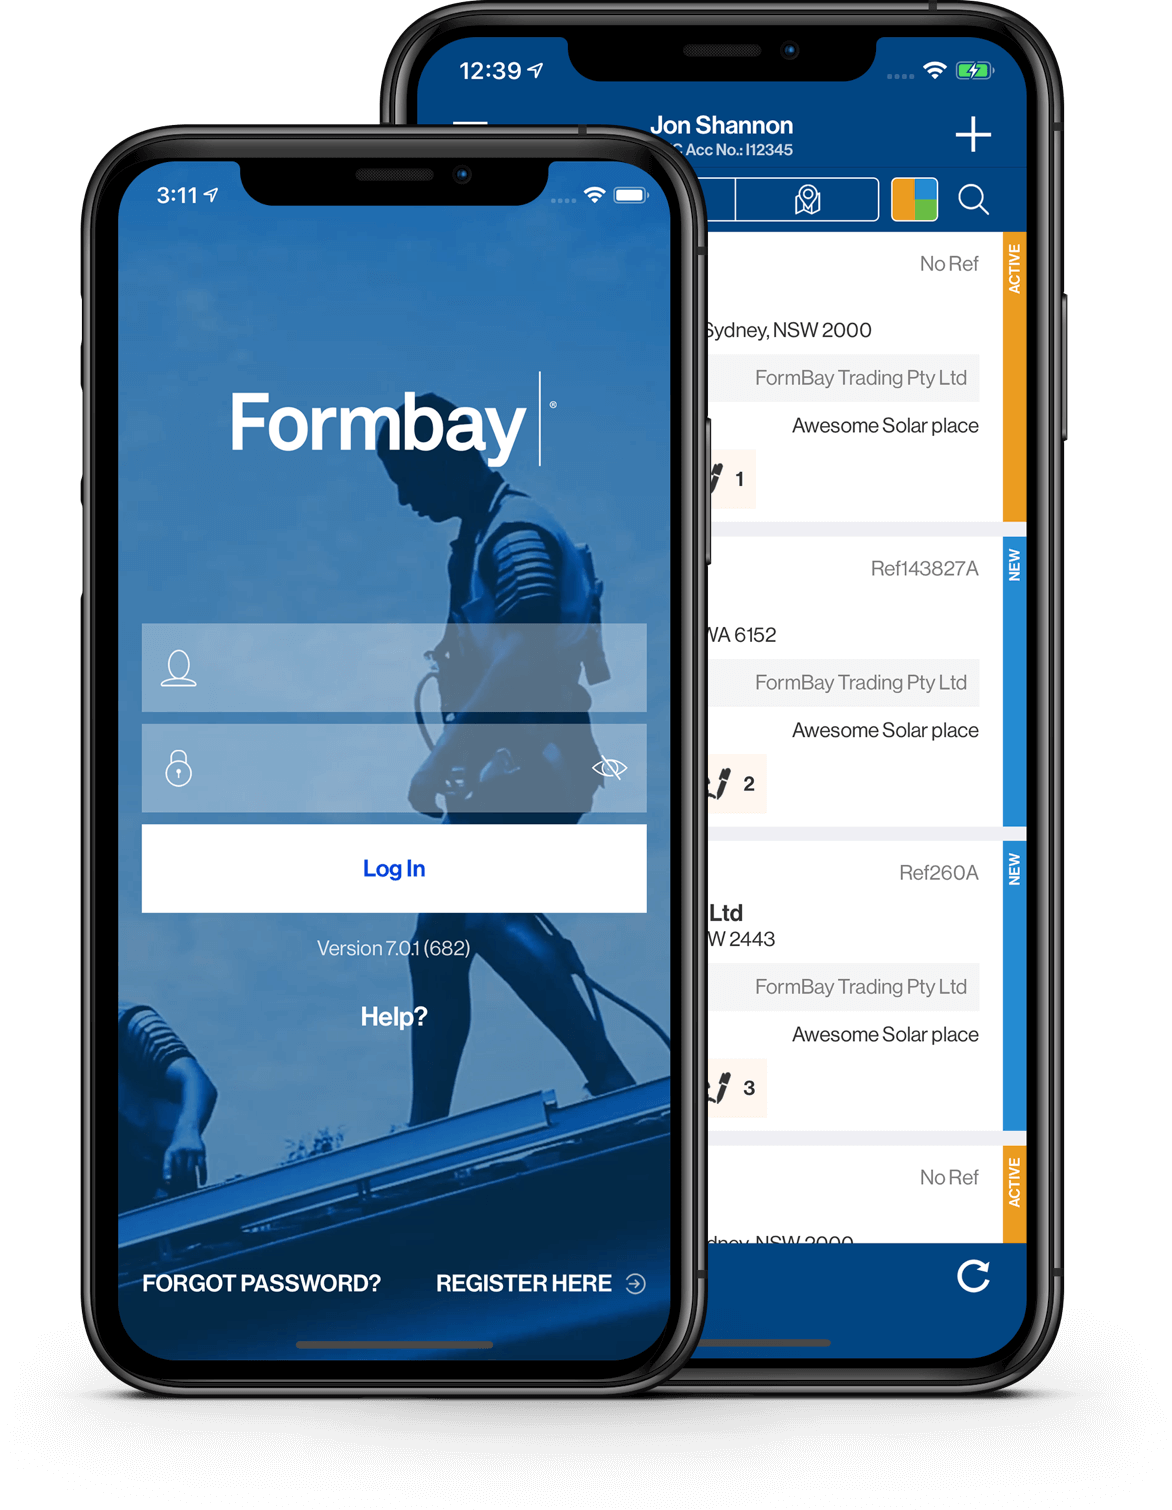 Formbay app login screen and display